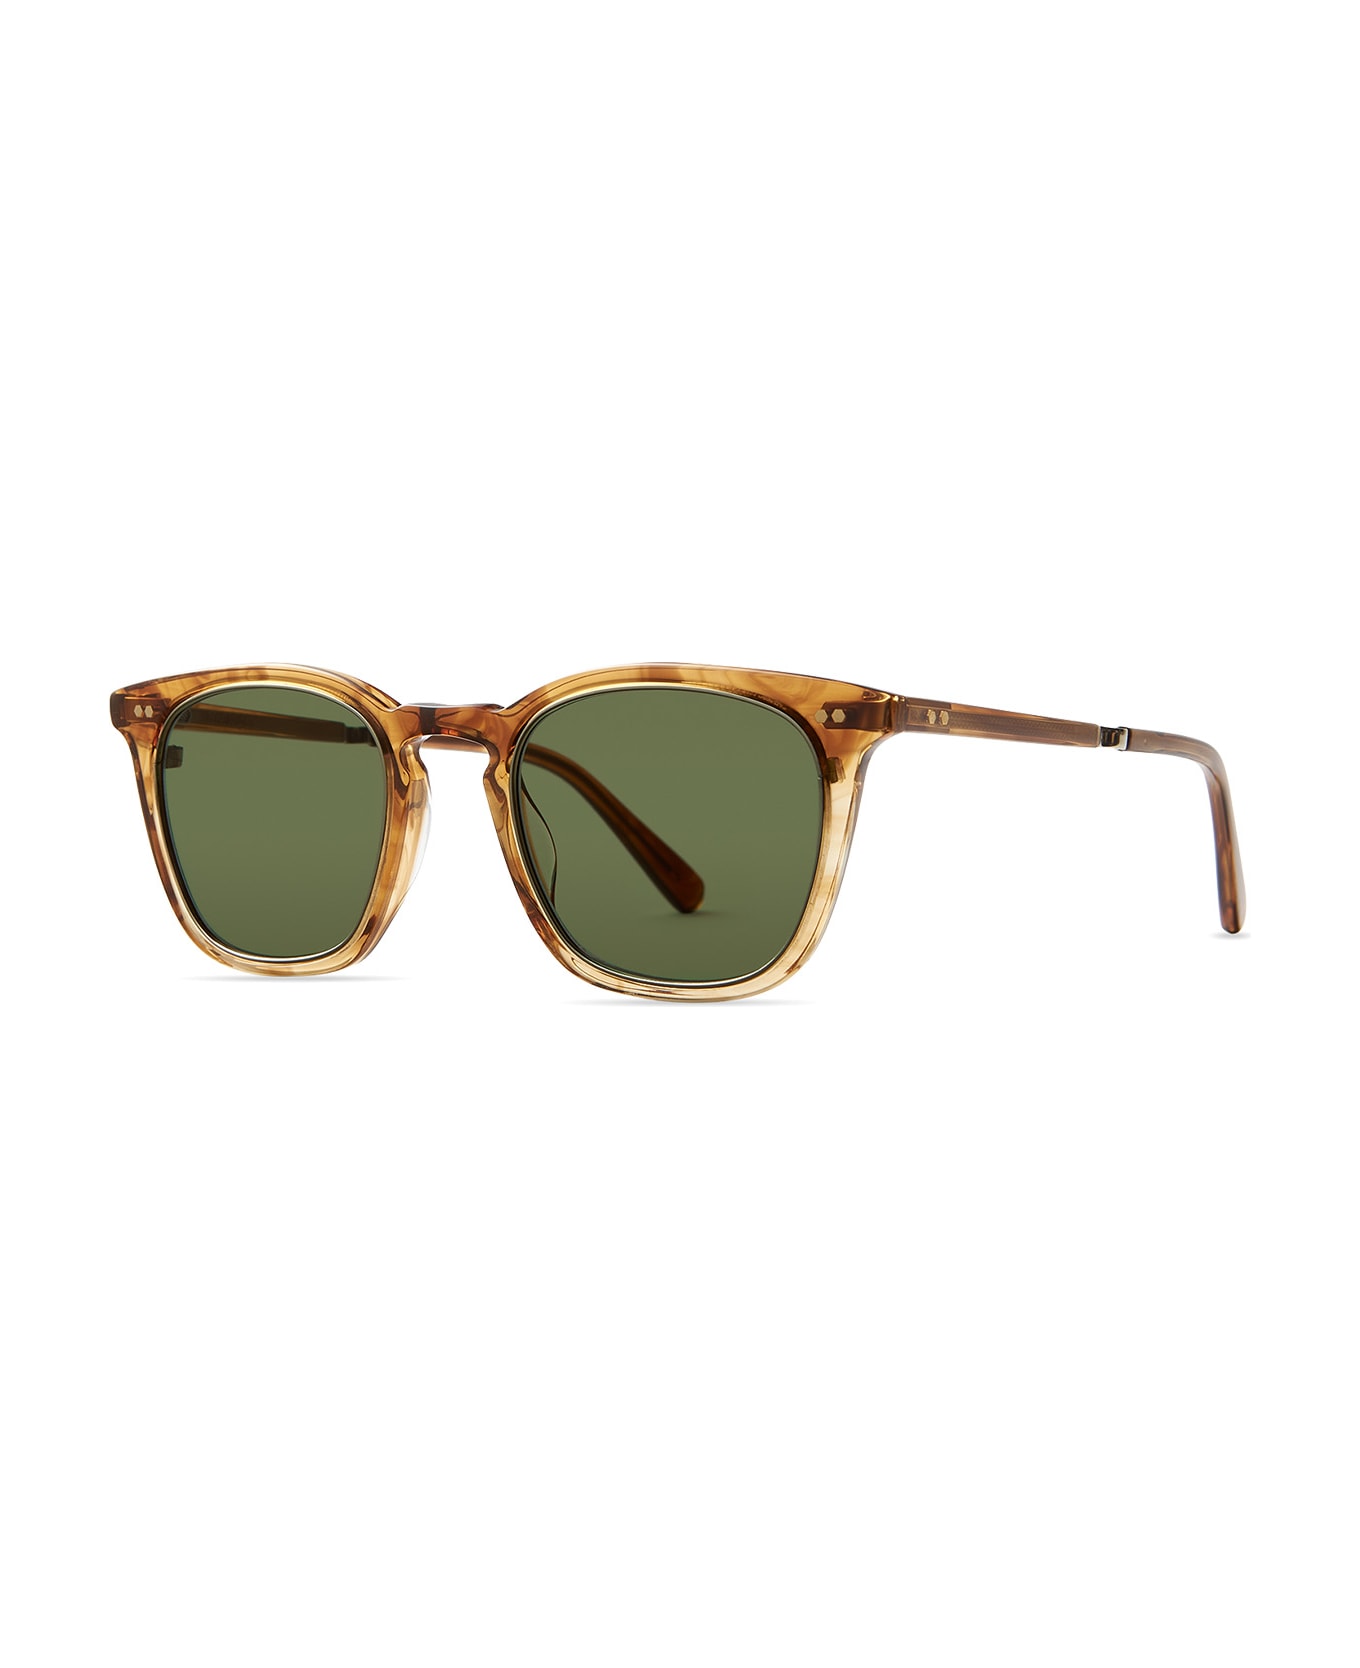 Mr. Leight Getty Ii S Marbled Rye-antique Gold Sunglasses - prada eyewear black cat-eye sunglasses